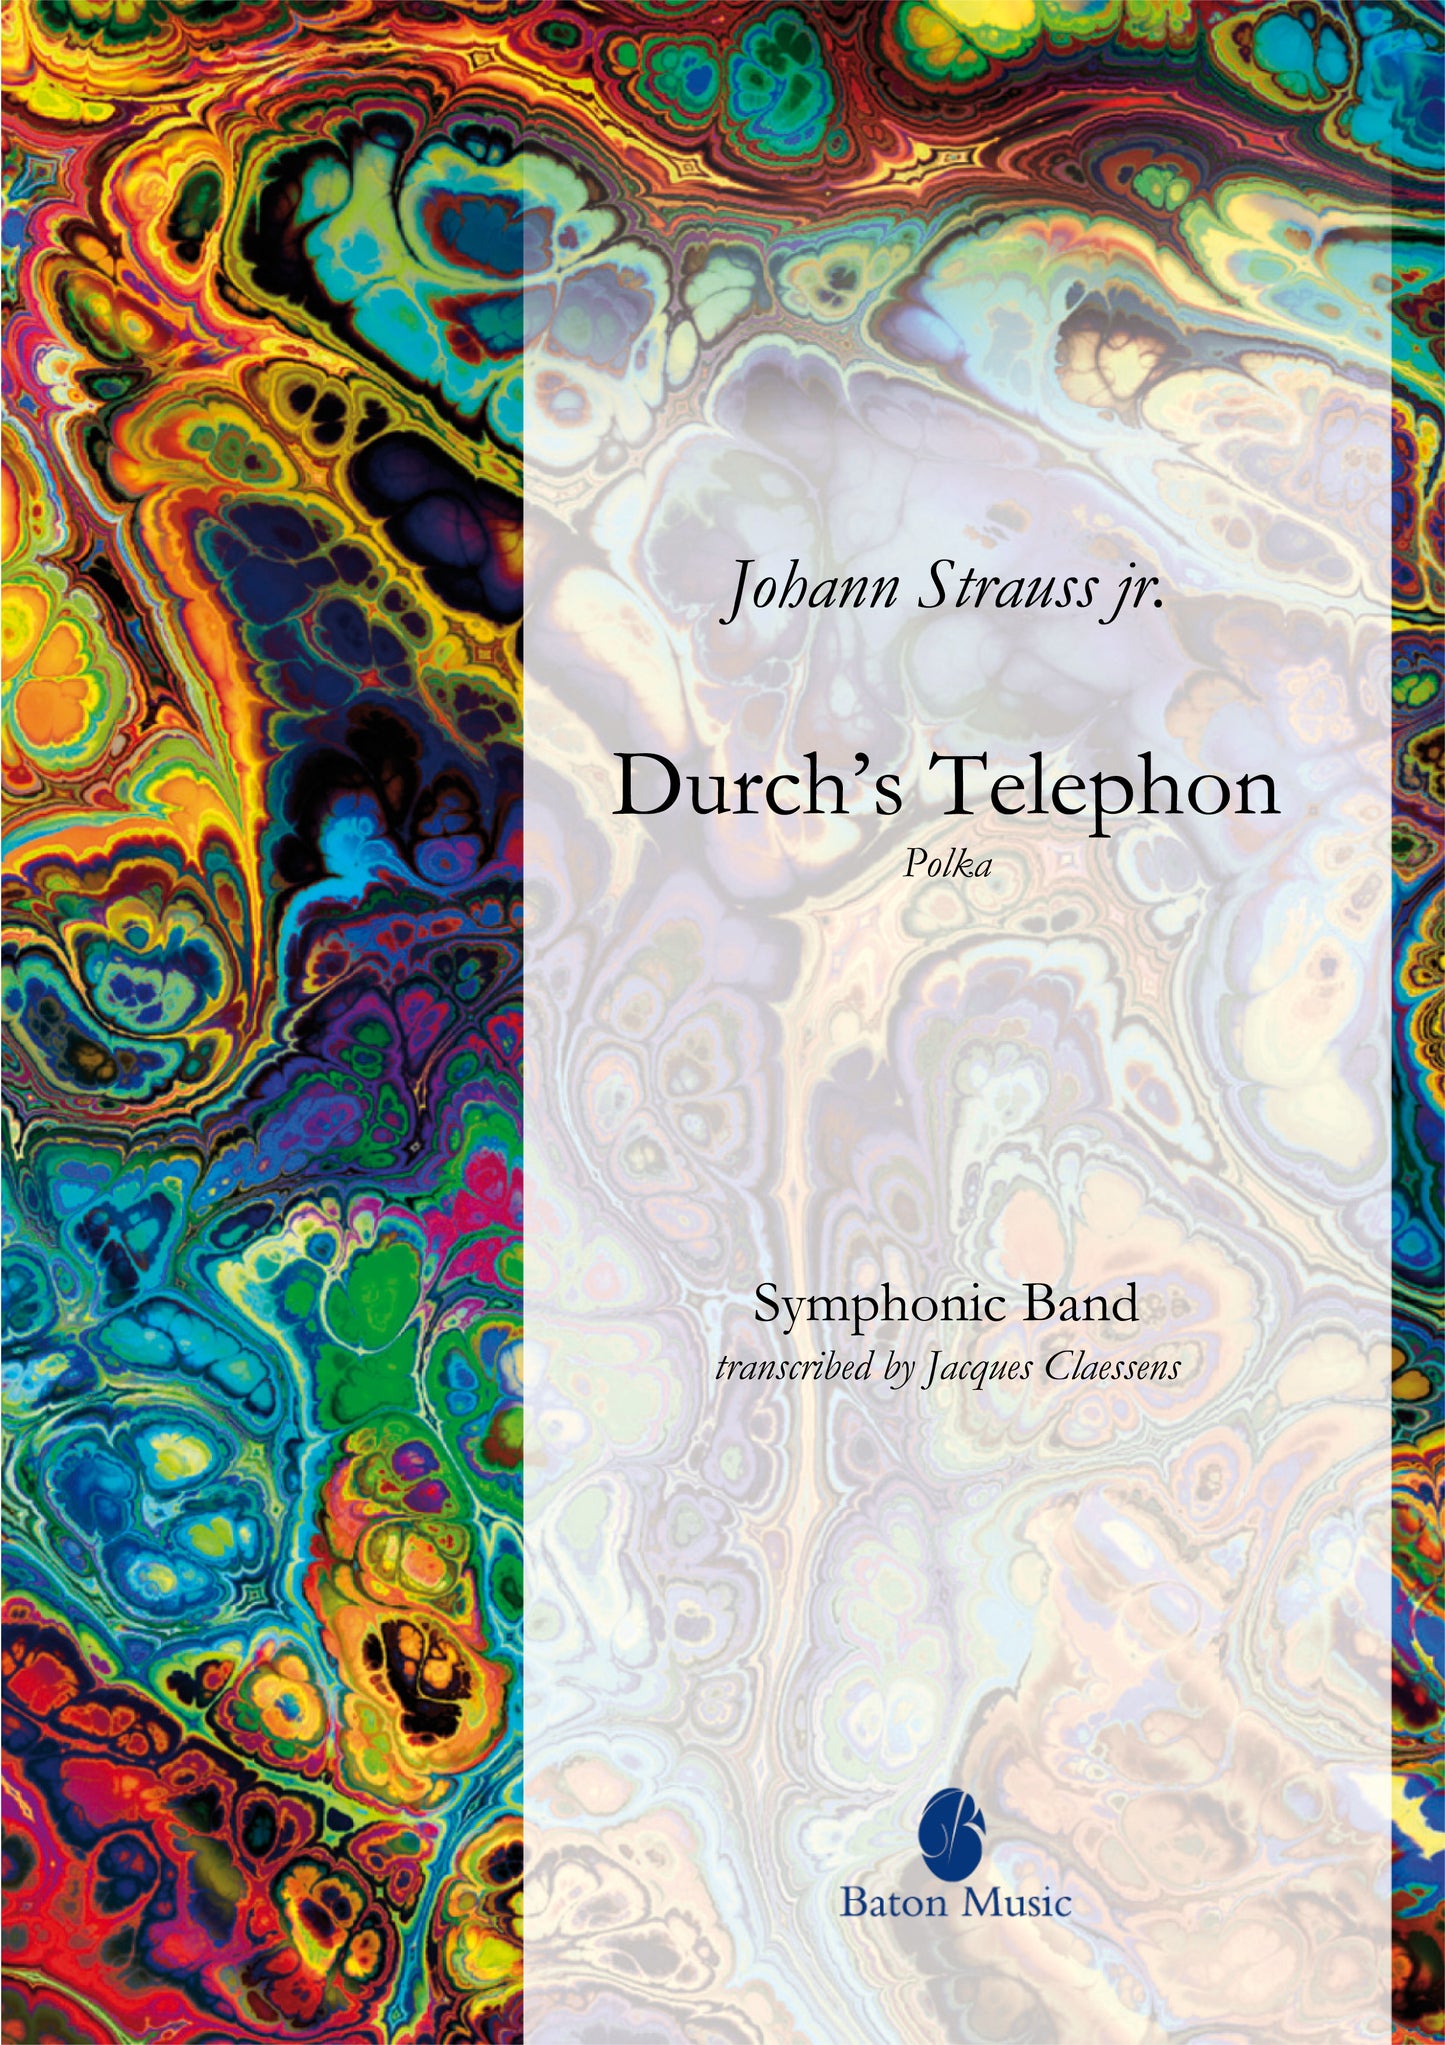 Durch's Telephon (Polka) - Johann Strauss